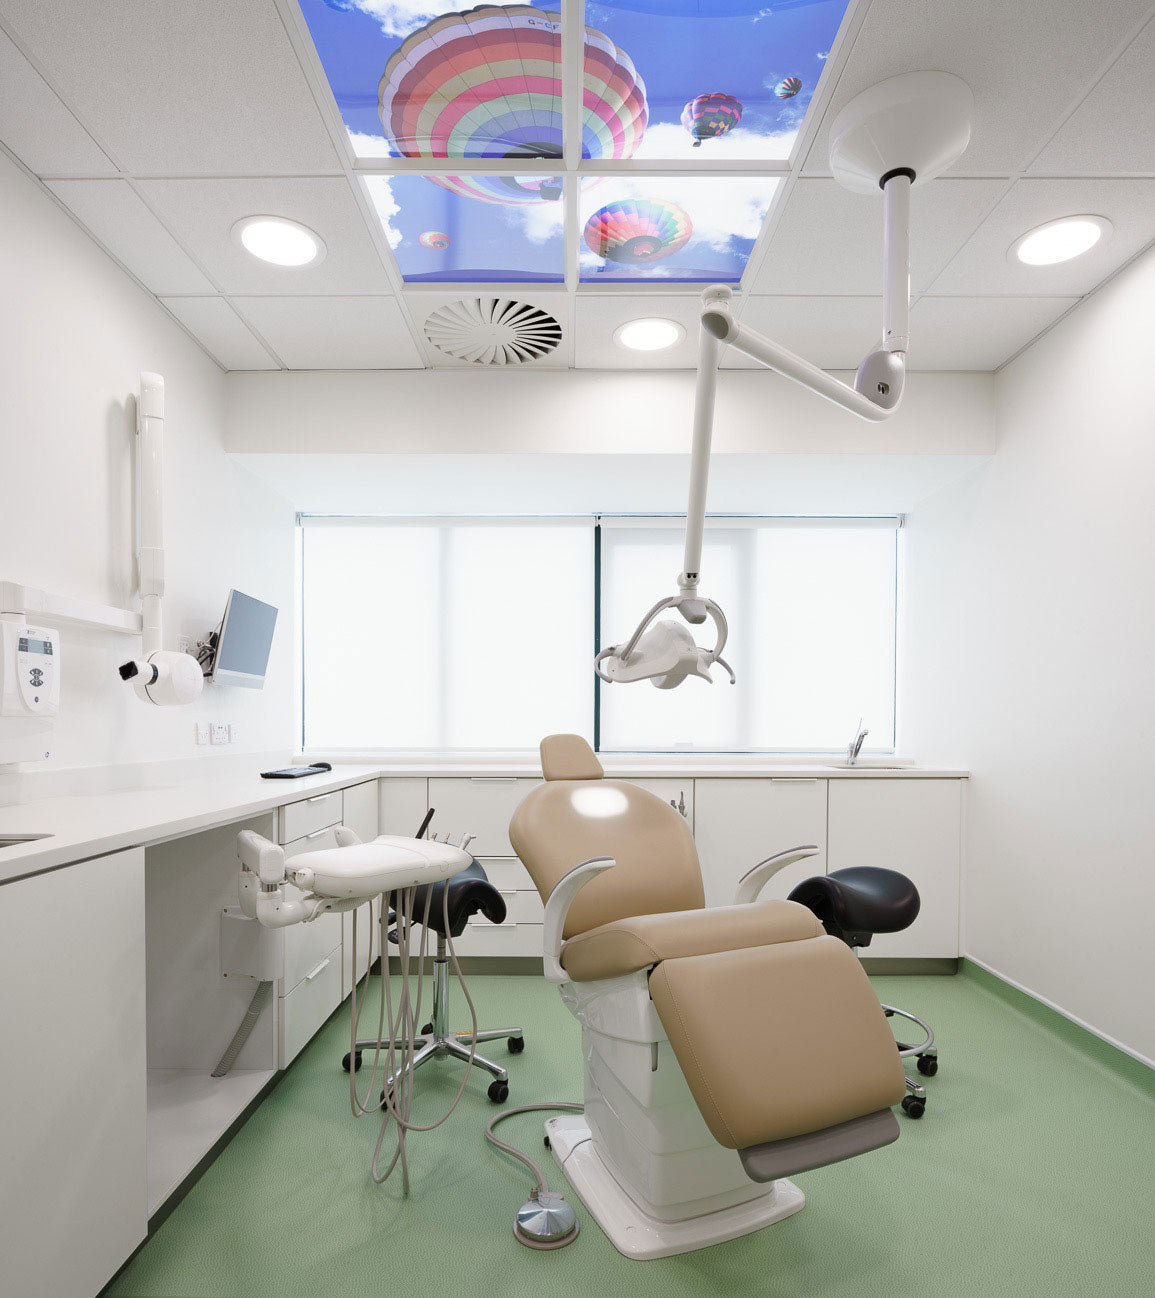 Inside the Happy Teeth paediatric dentist clinic